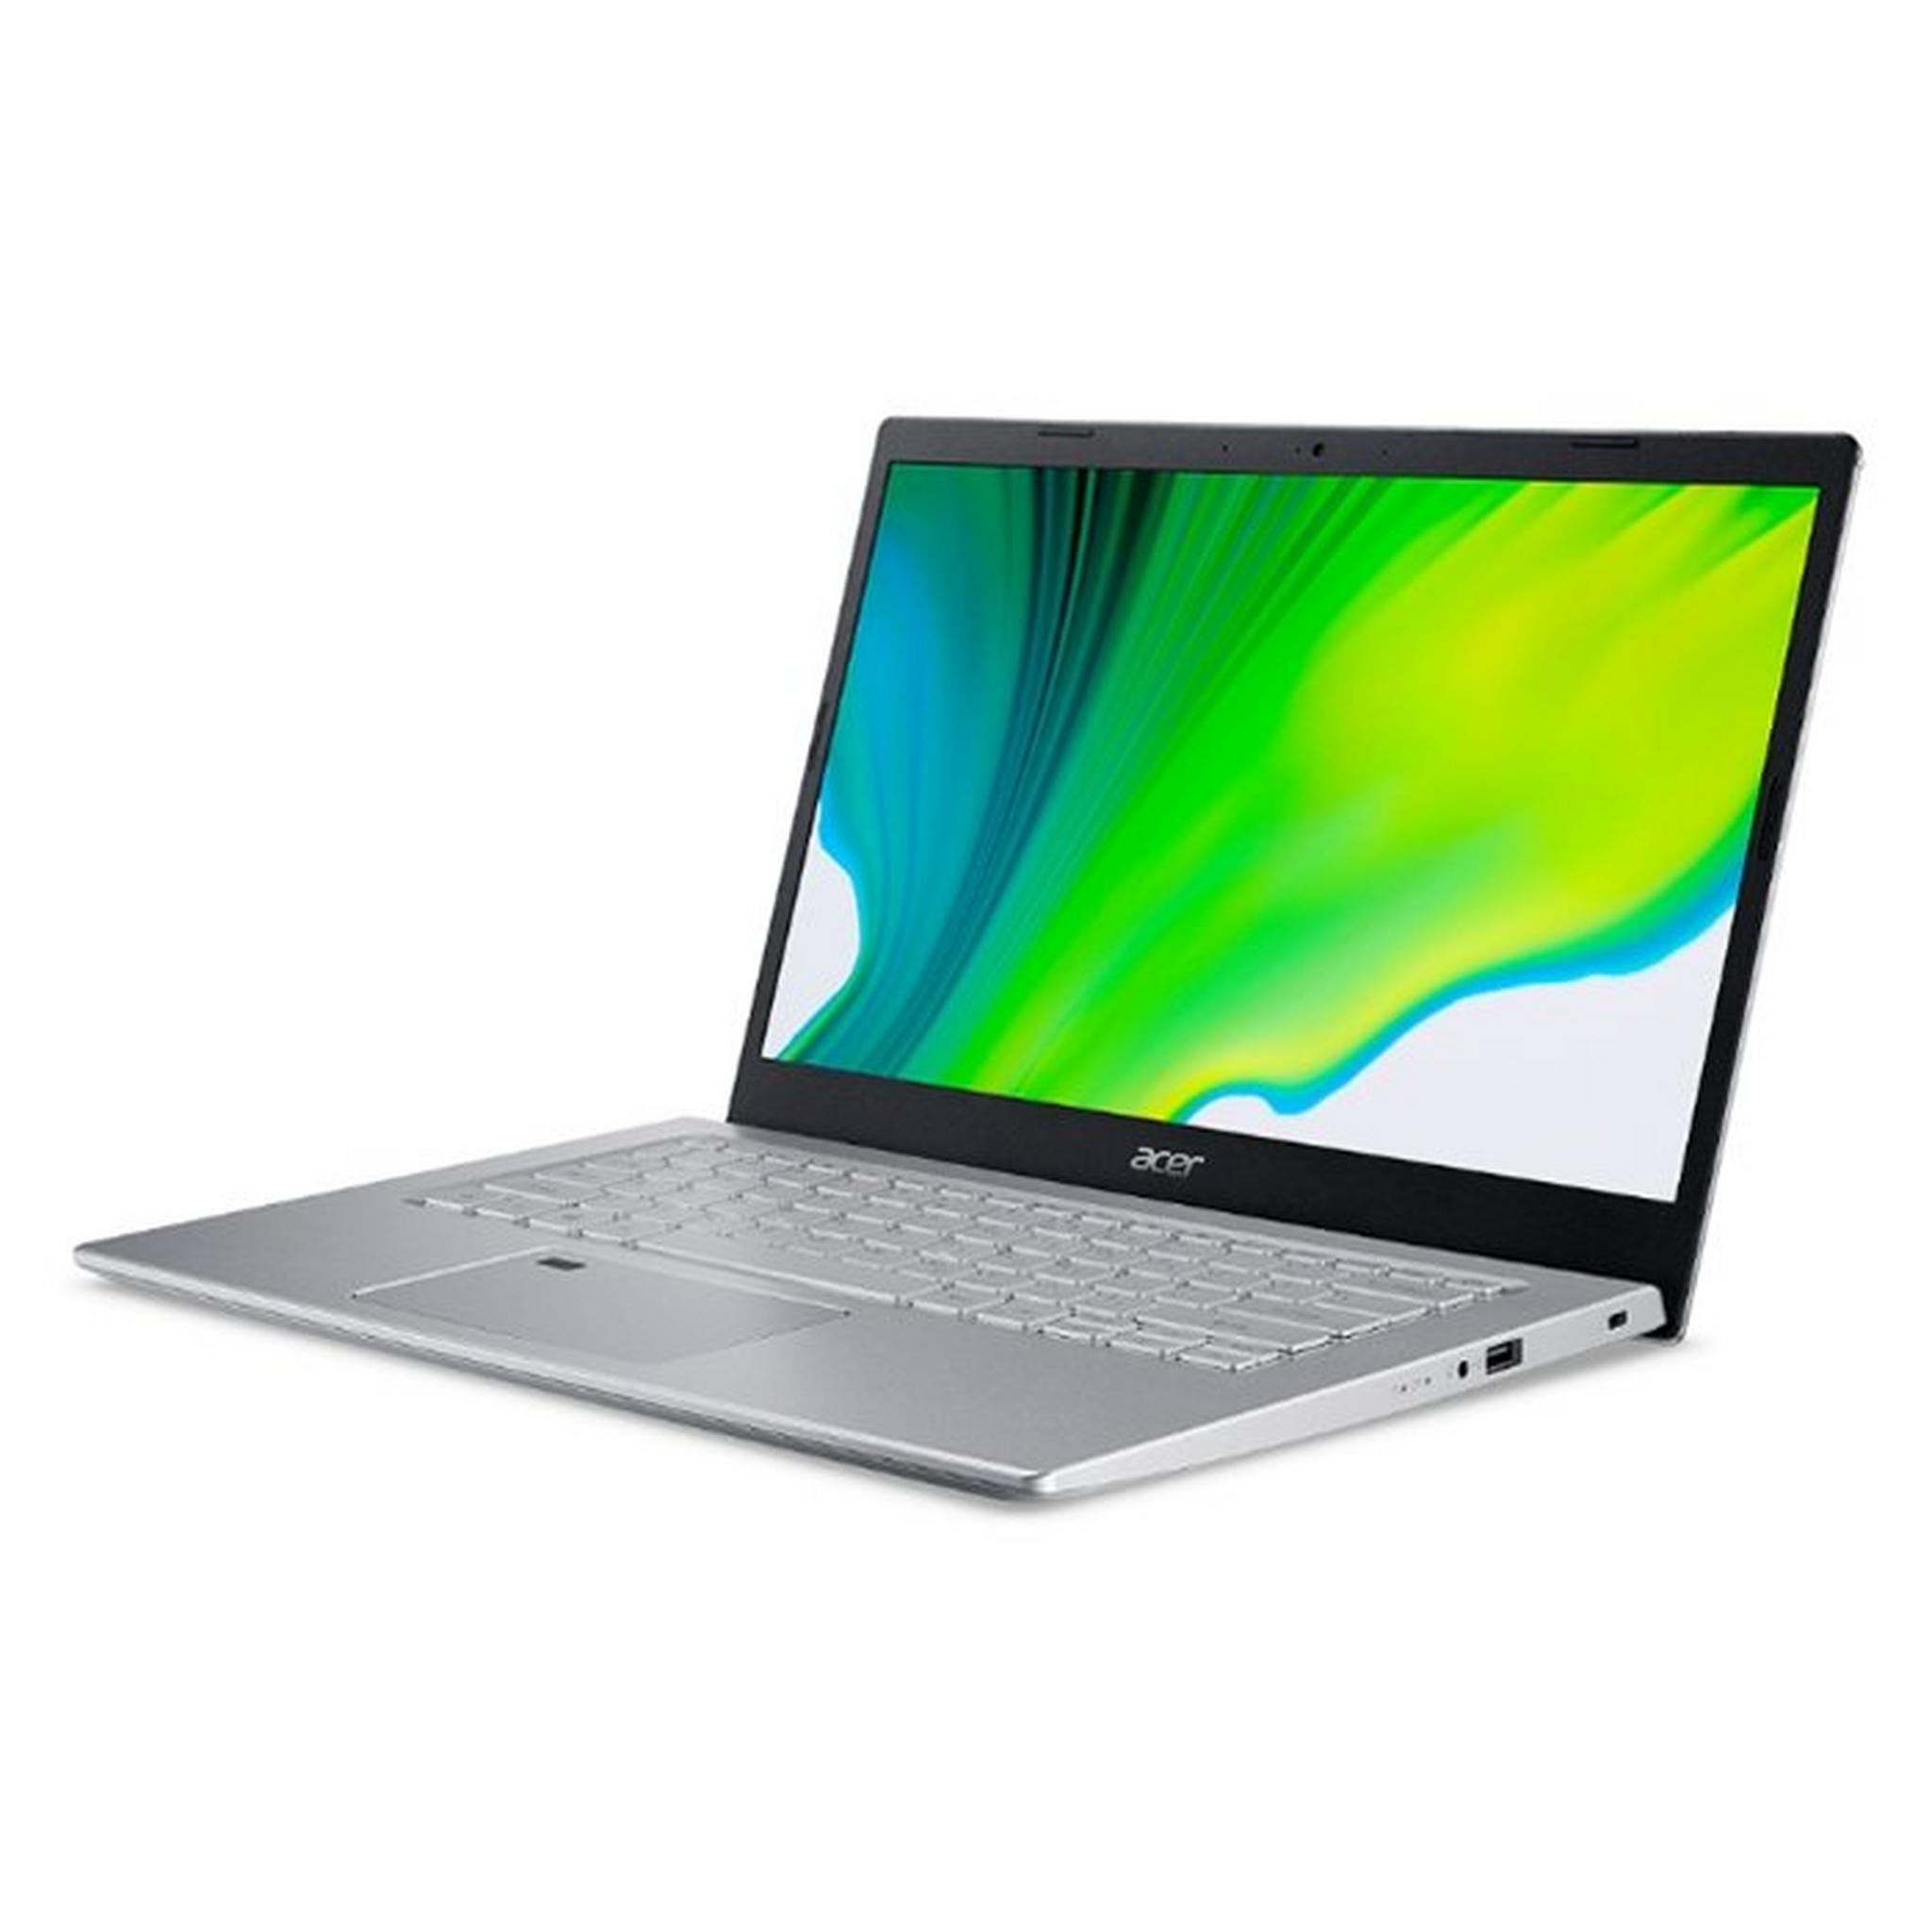 Acer Aspire 515 AMD Ryzen 7, 16GB RAM, 512GB SSD, 15.6-inch Laptop - Silver